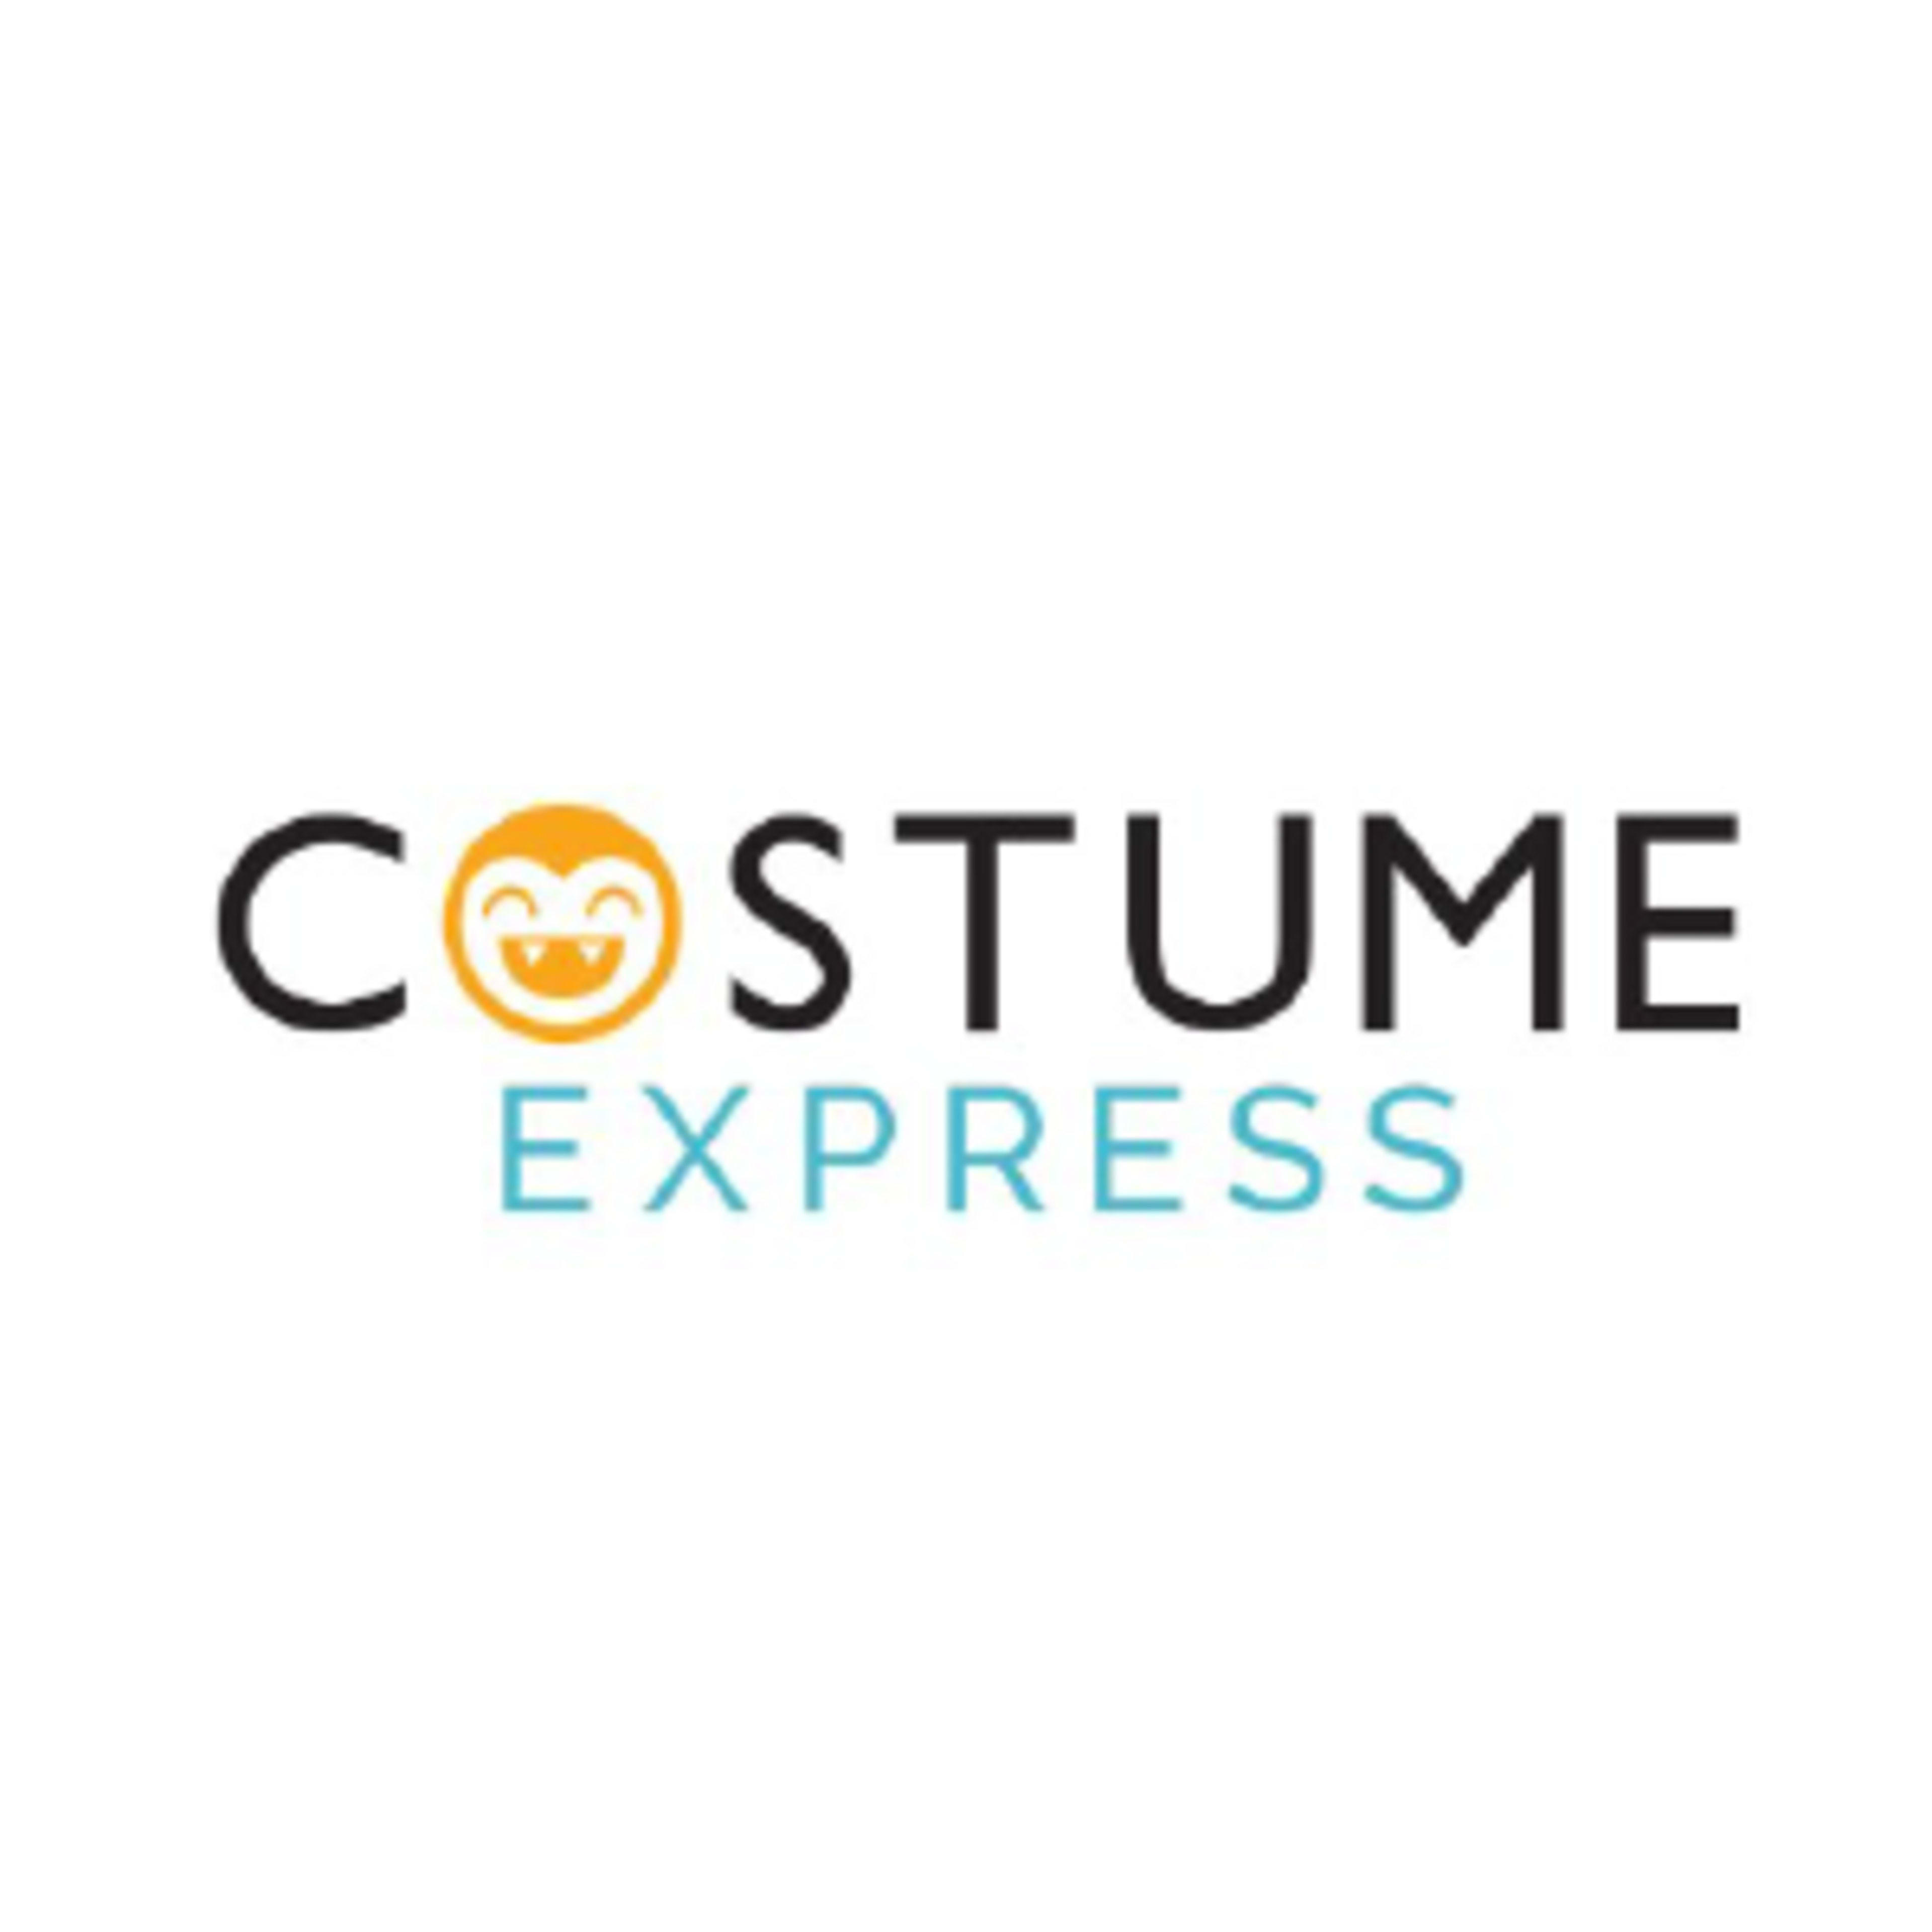 Costume ExpressCode